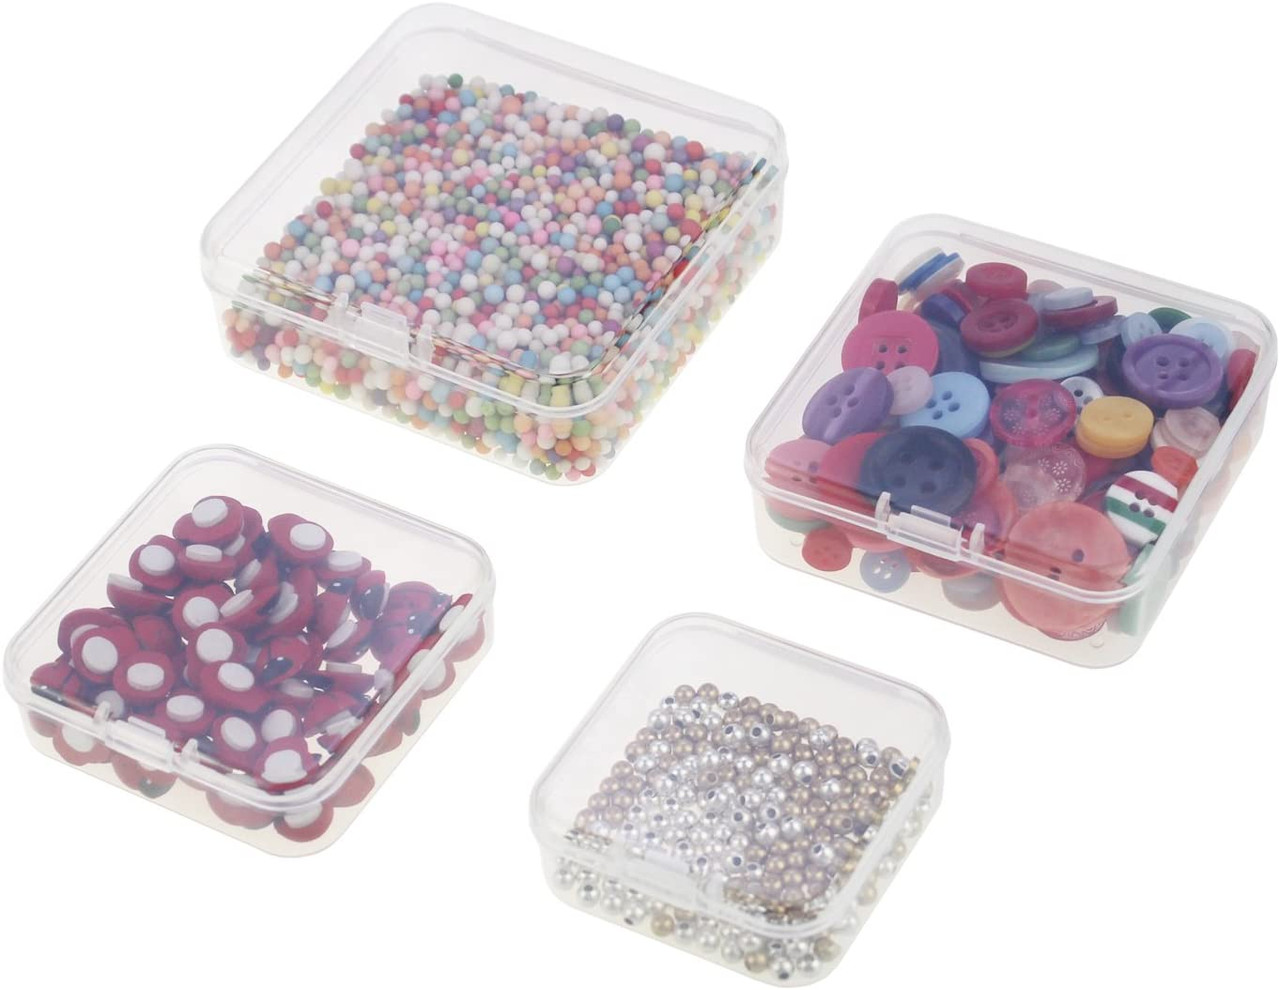 LJY 28 Pieces Mixed Sizes Rectangular Empty Mini Plastic Storage